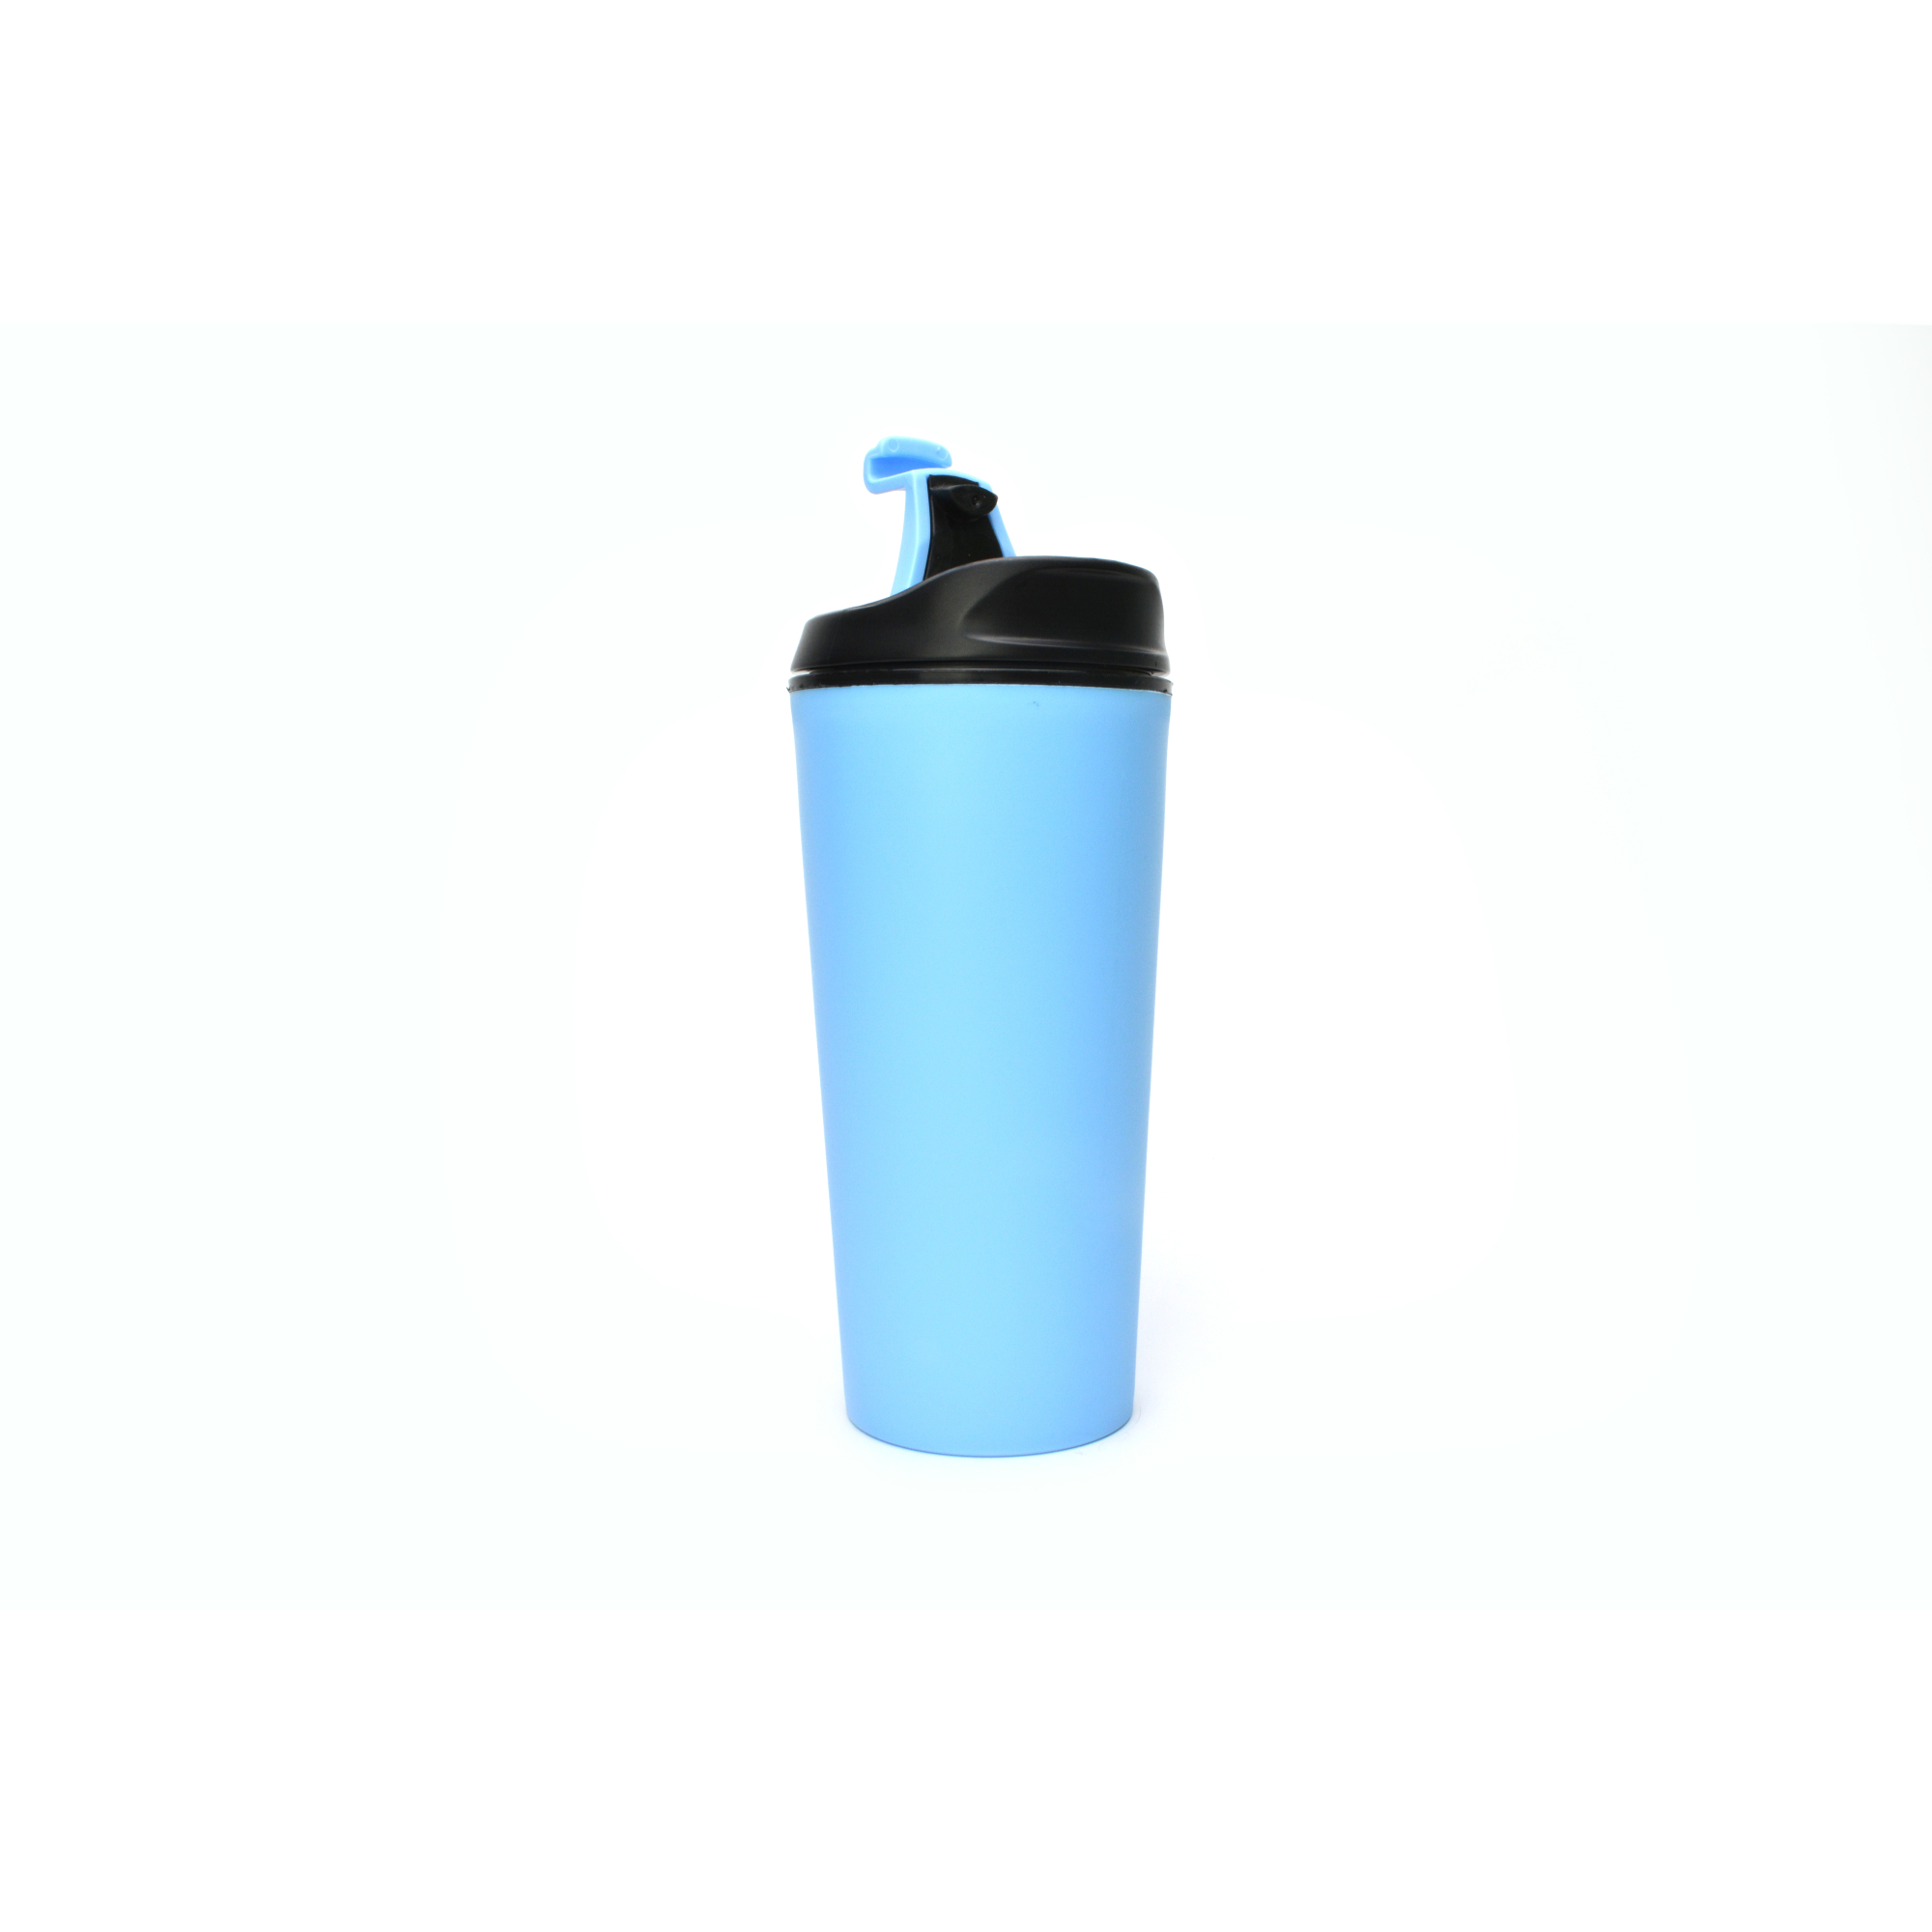 Стакан-тамблер для кофе WOWBOTTLES двойные стенки, 350 мл стакан spot фиолетовый